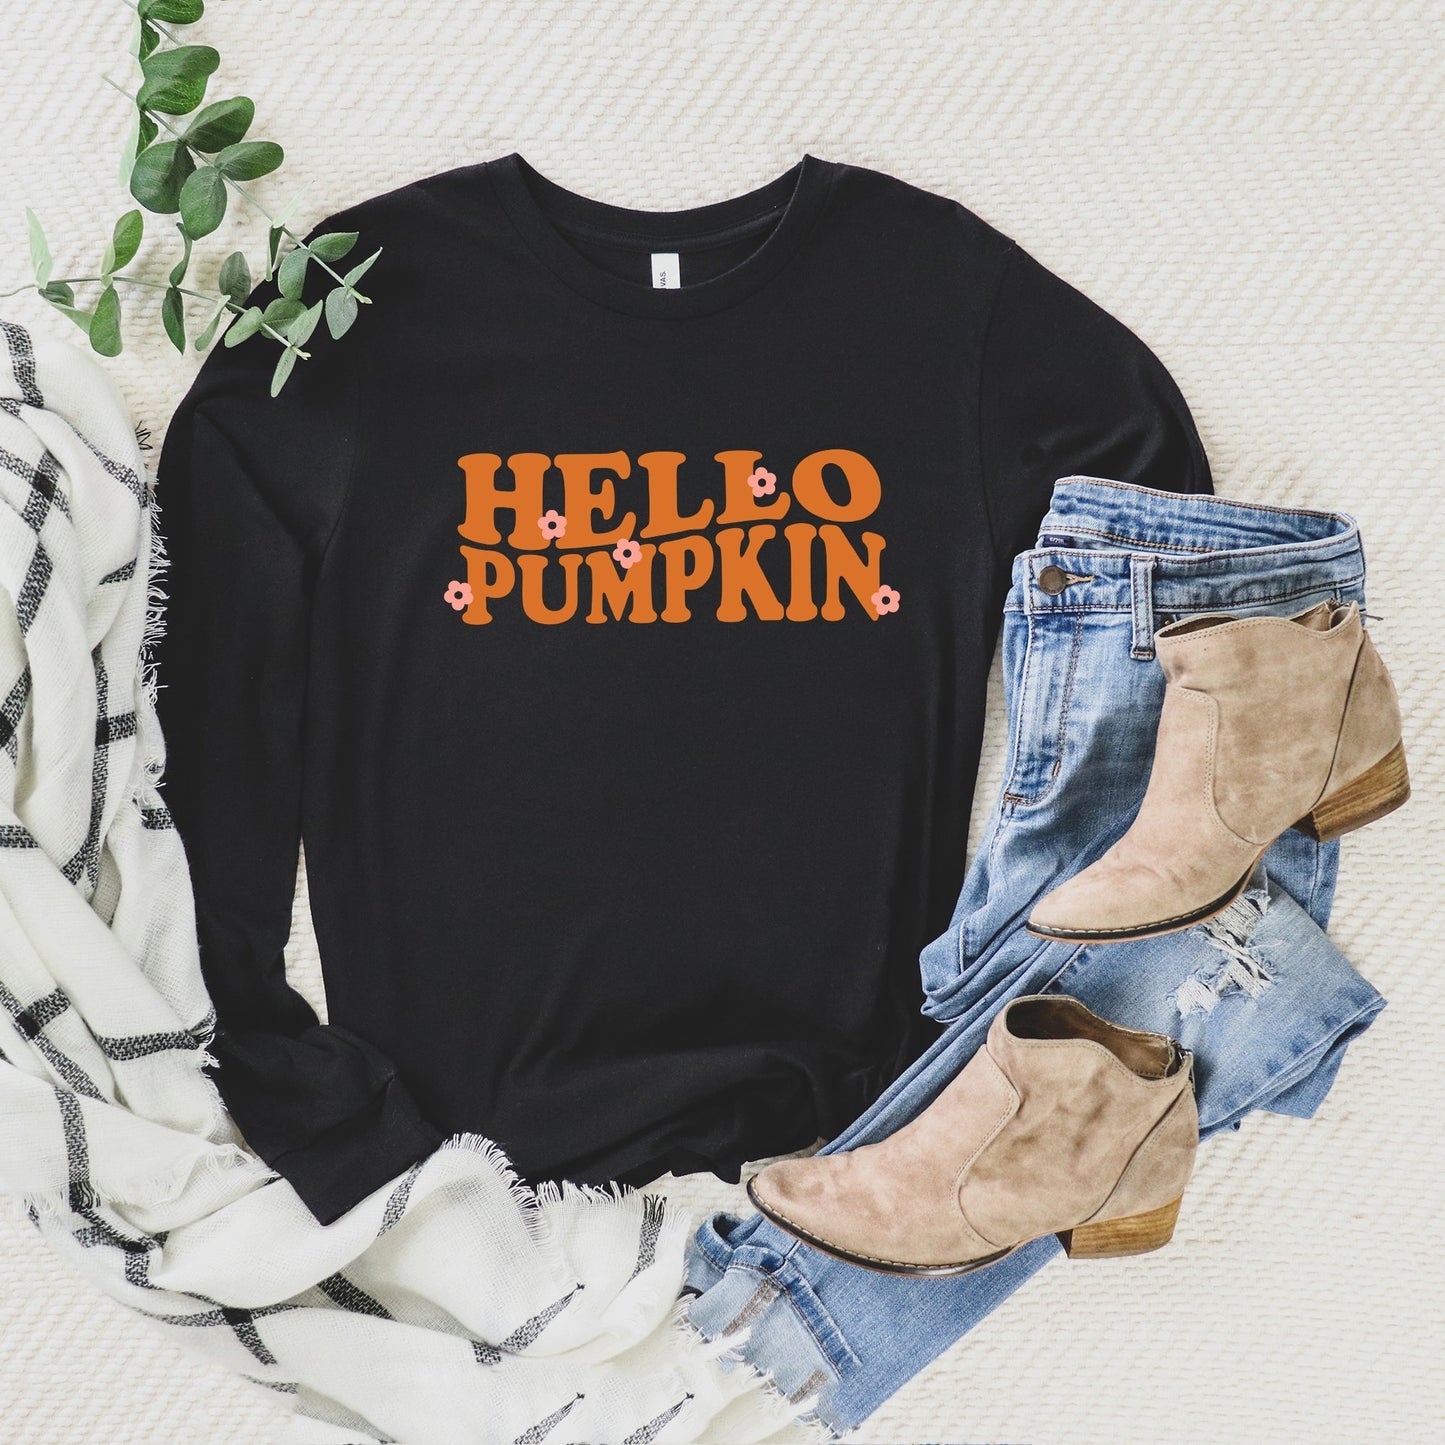 Hello Pumpkin Flowers | Long Sleeve Crew Neck